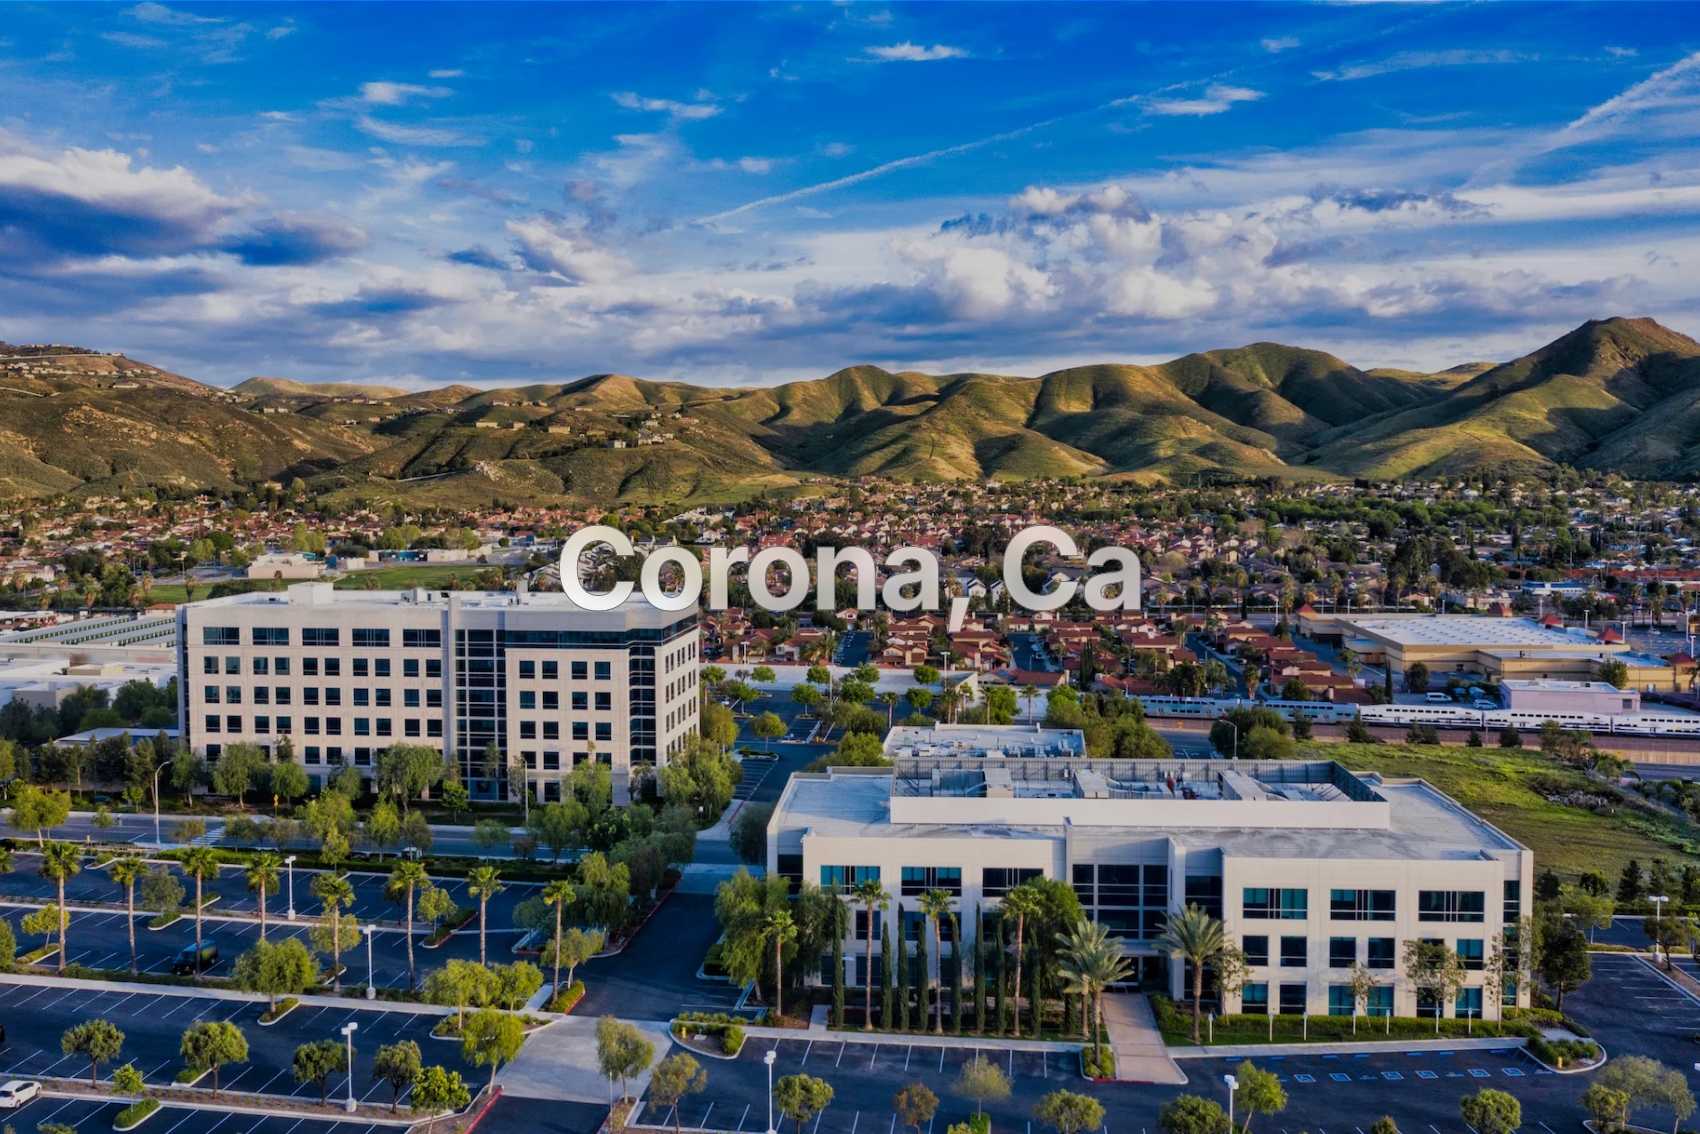 Image of the city of Corona, Ca